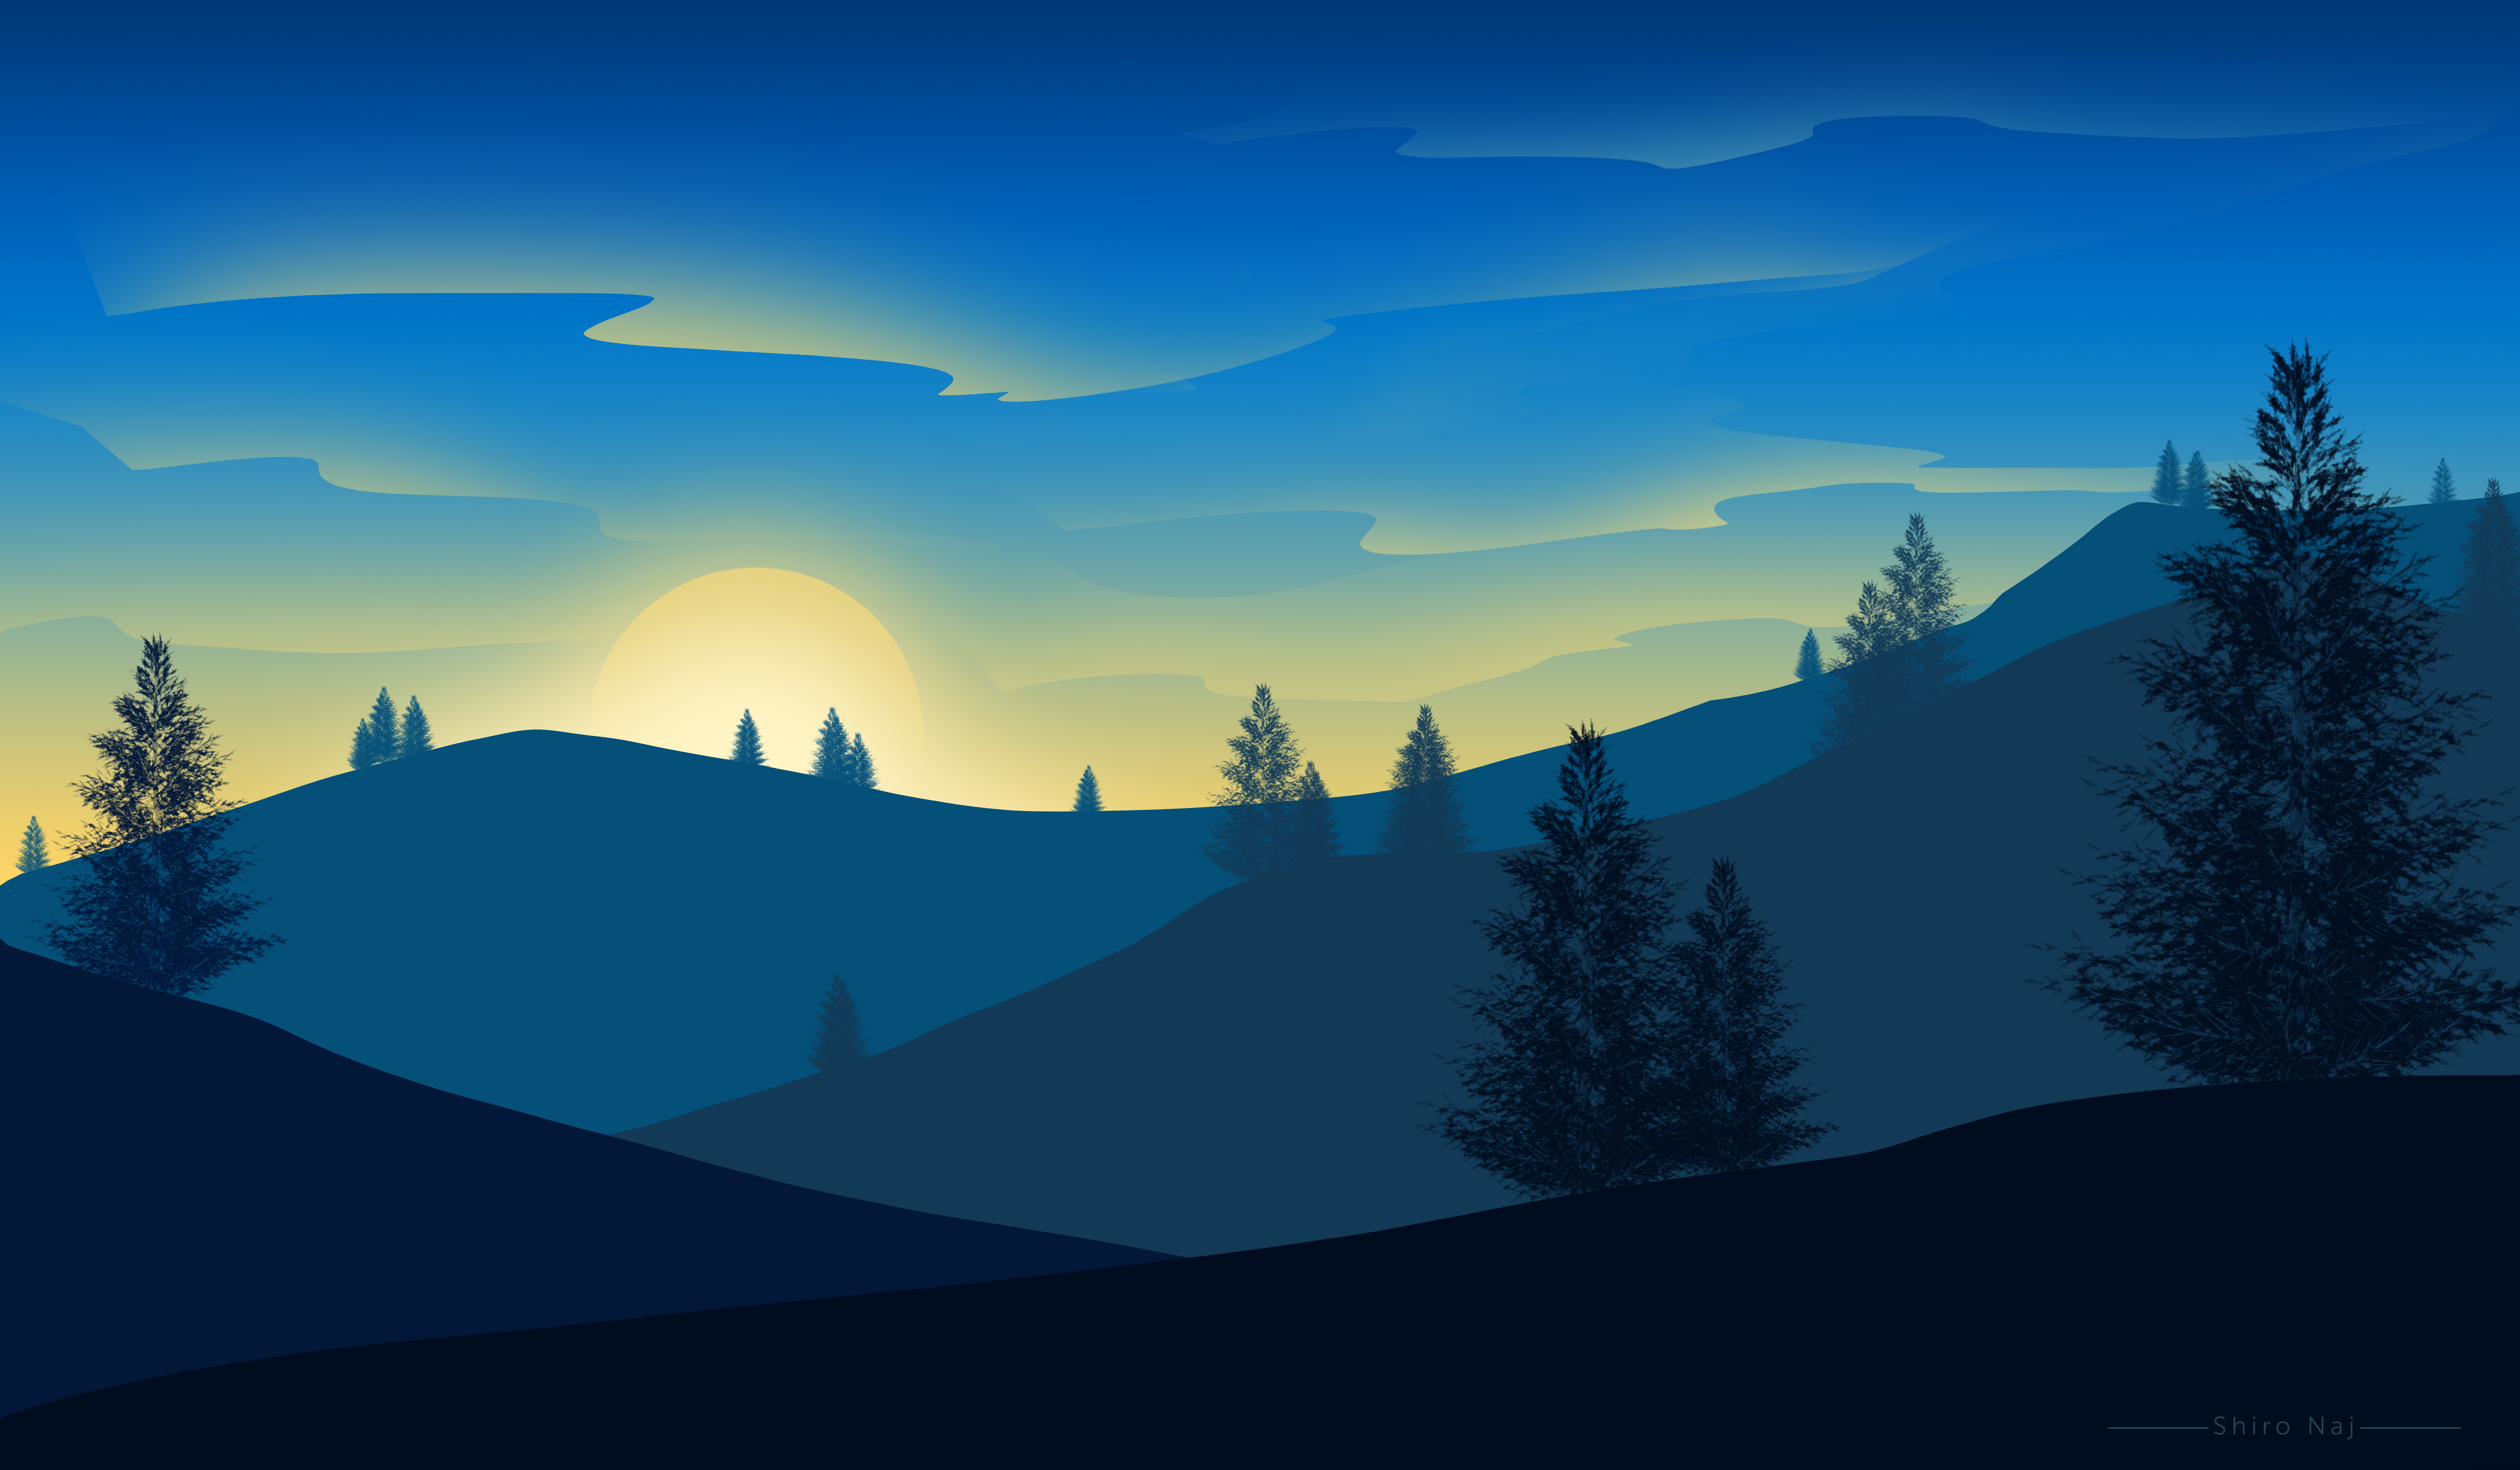 Sunrise Landscape Minimalism 5k, HD Artist, 4k Wallpaper, Image, Background, Photo and Picture